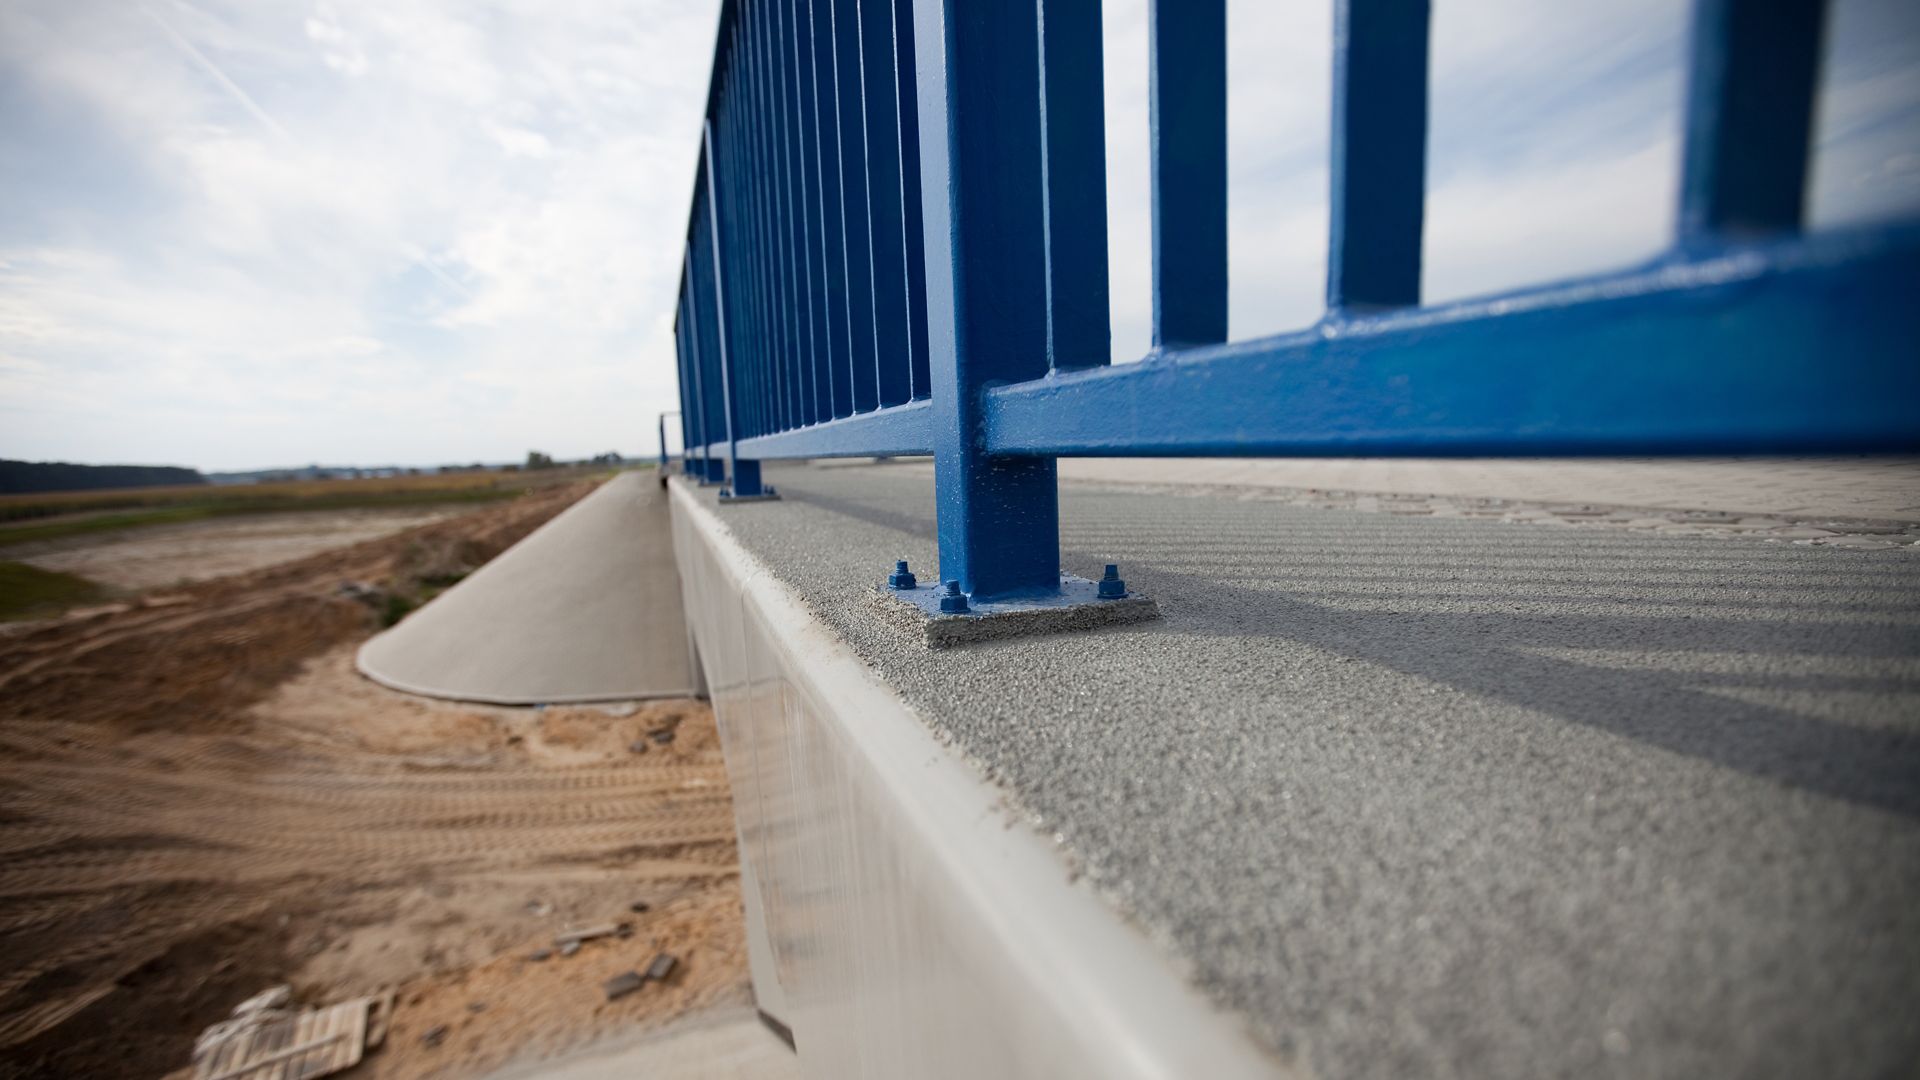 Blue railing on highway bridge in Poland